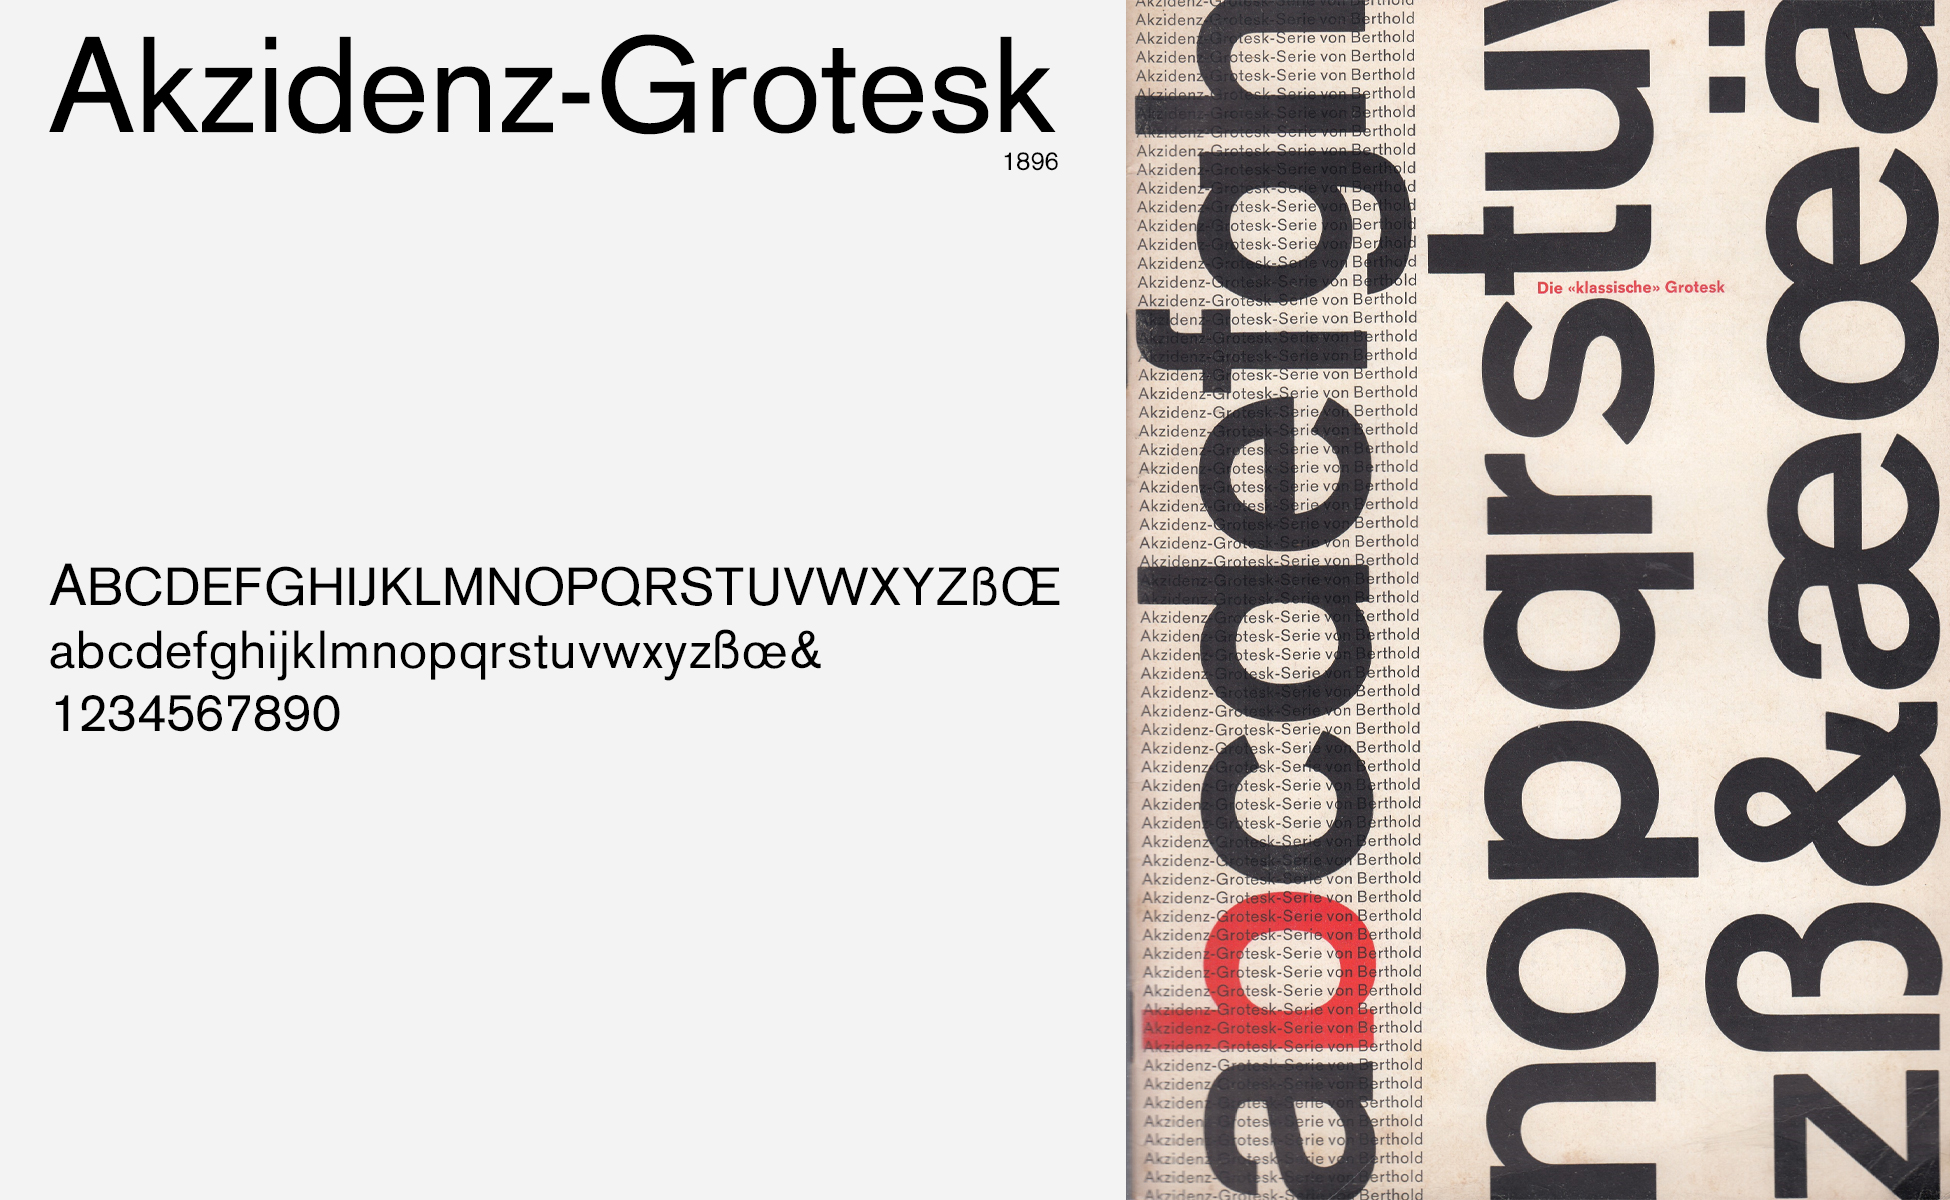 Akzidenz-Grotesk-1896-typo-lineale-moderniste